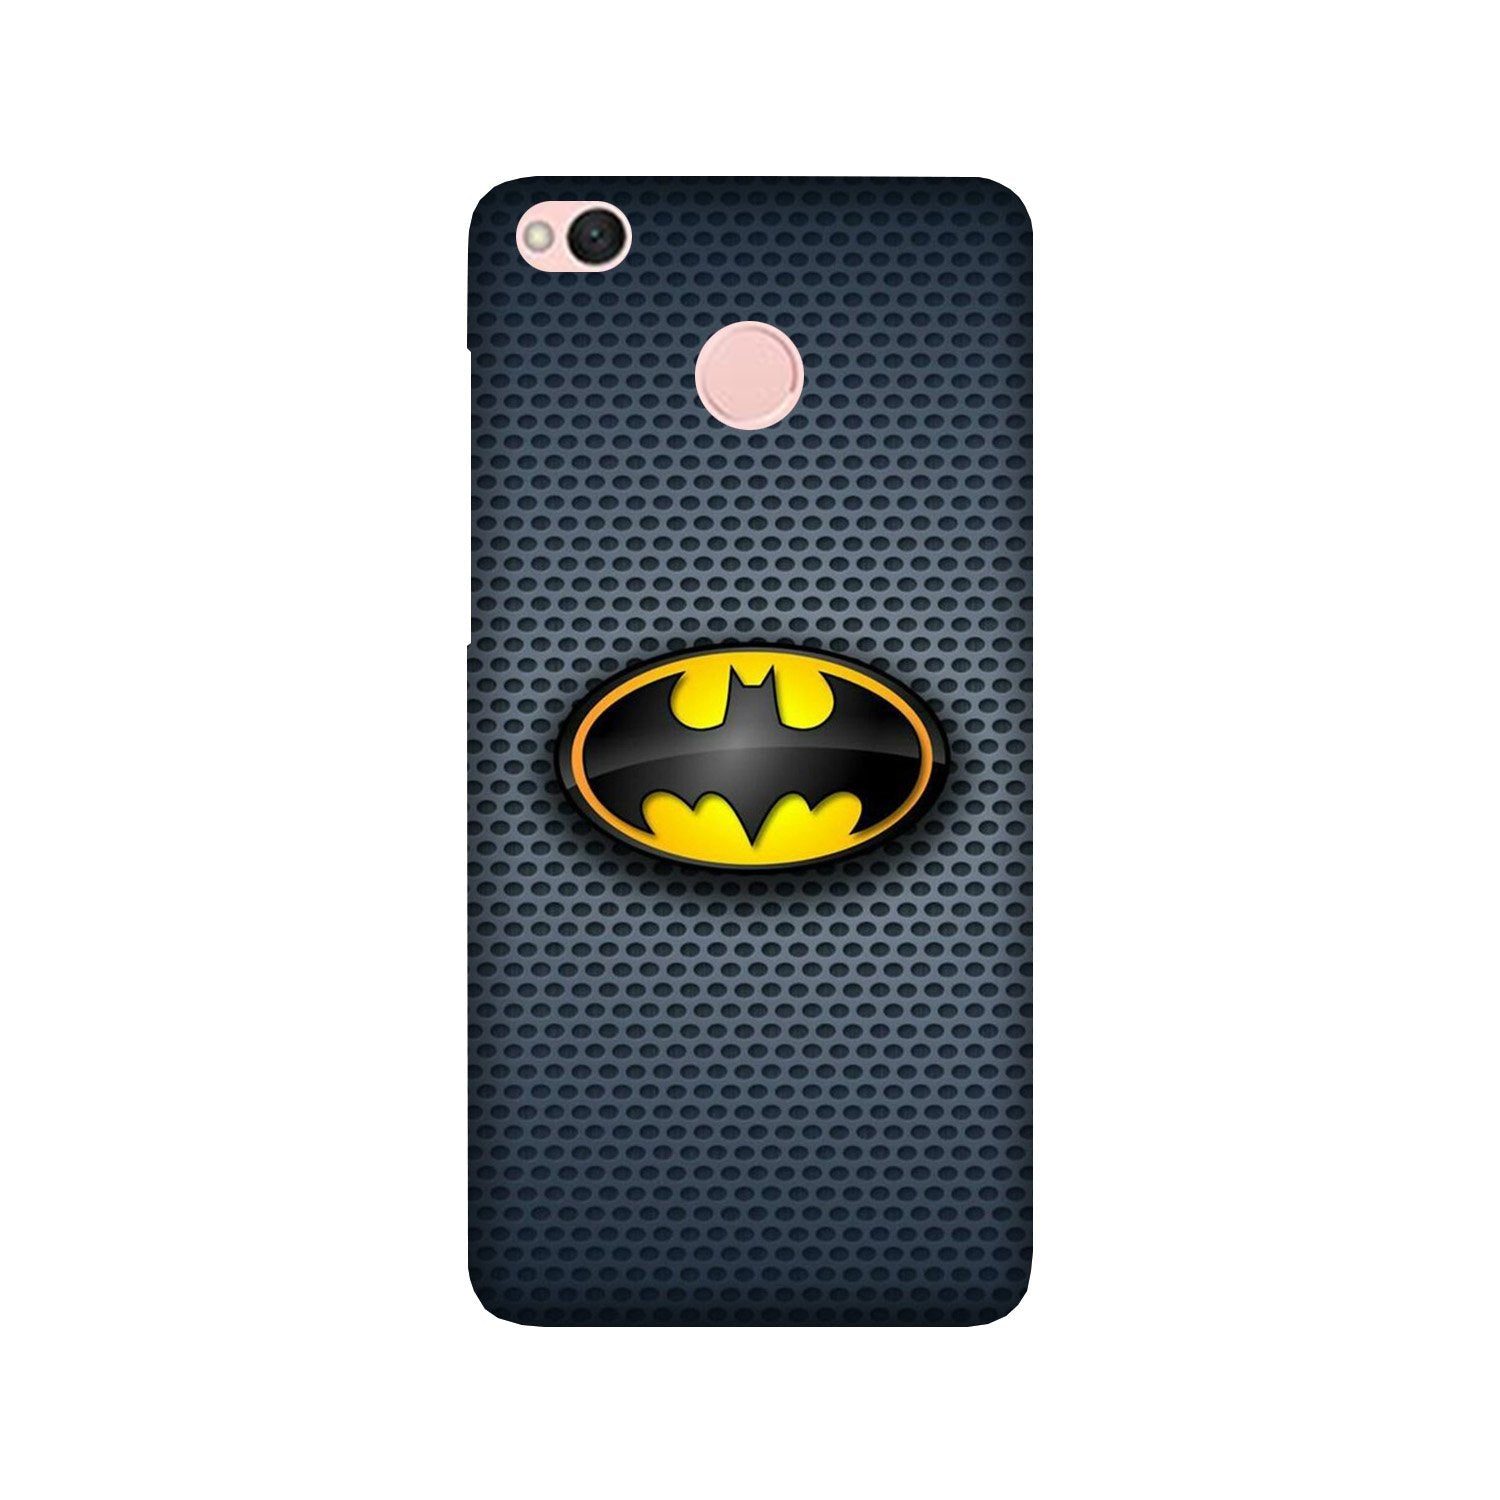 Batman Case for Redmi 4 (Design No. 244)